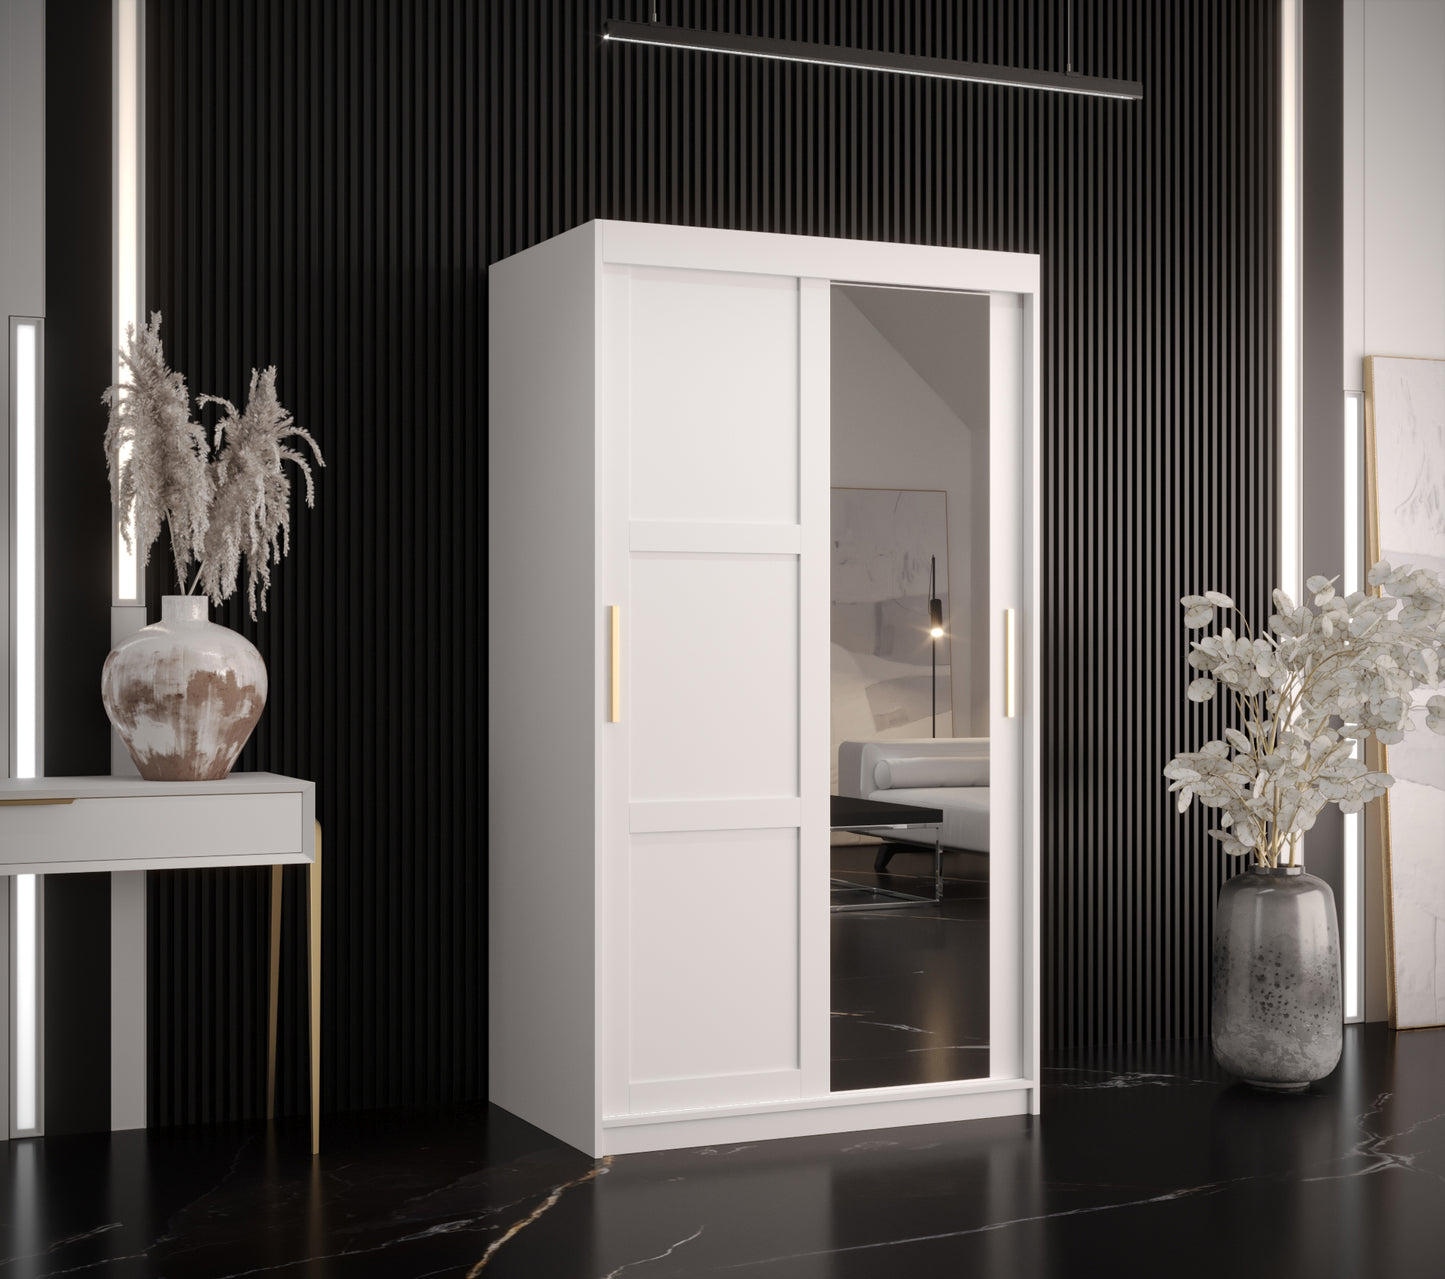 RAMIRA 2 - Wardrobe Sliding Door with Mirror in Black or White Combinations, Shelves, Rails, Drawer optional >100cm<